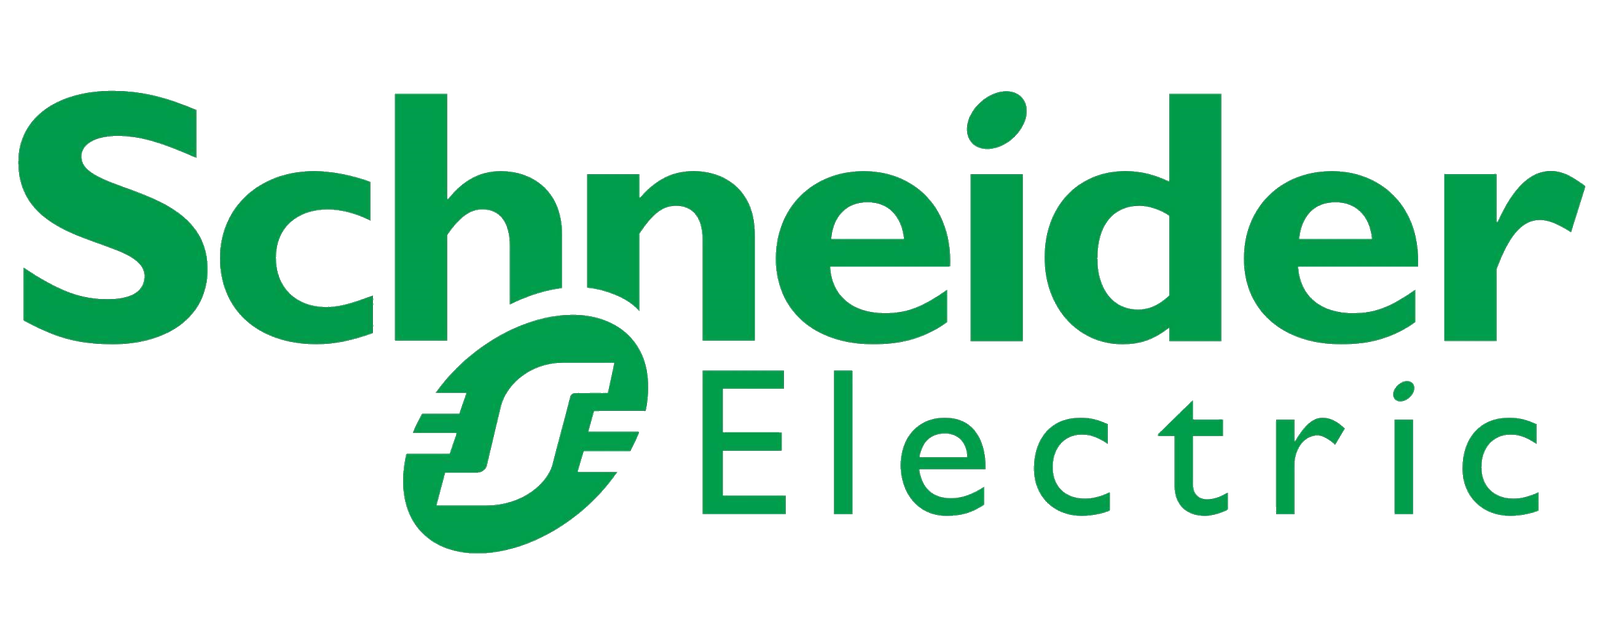 Schneider electric logo.png